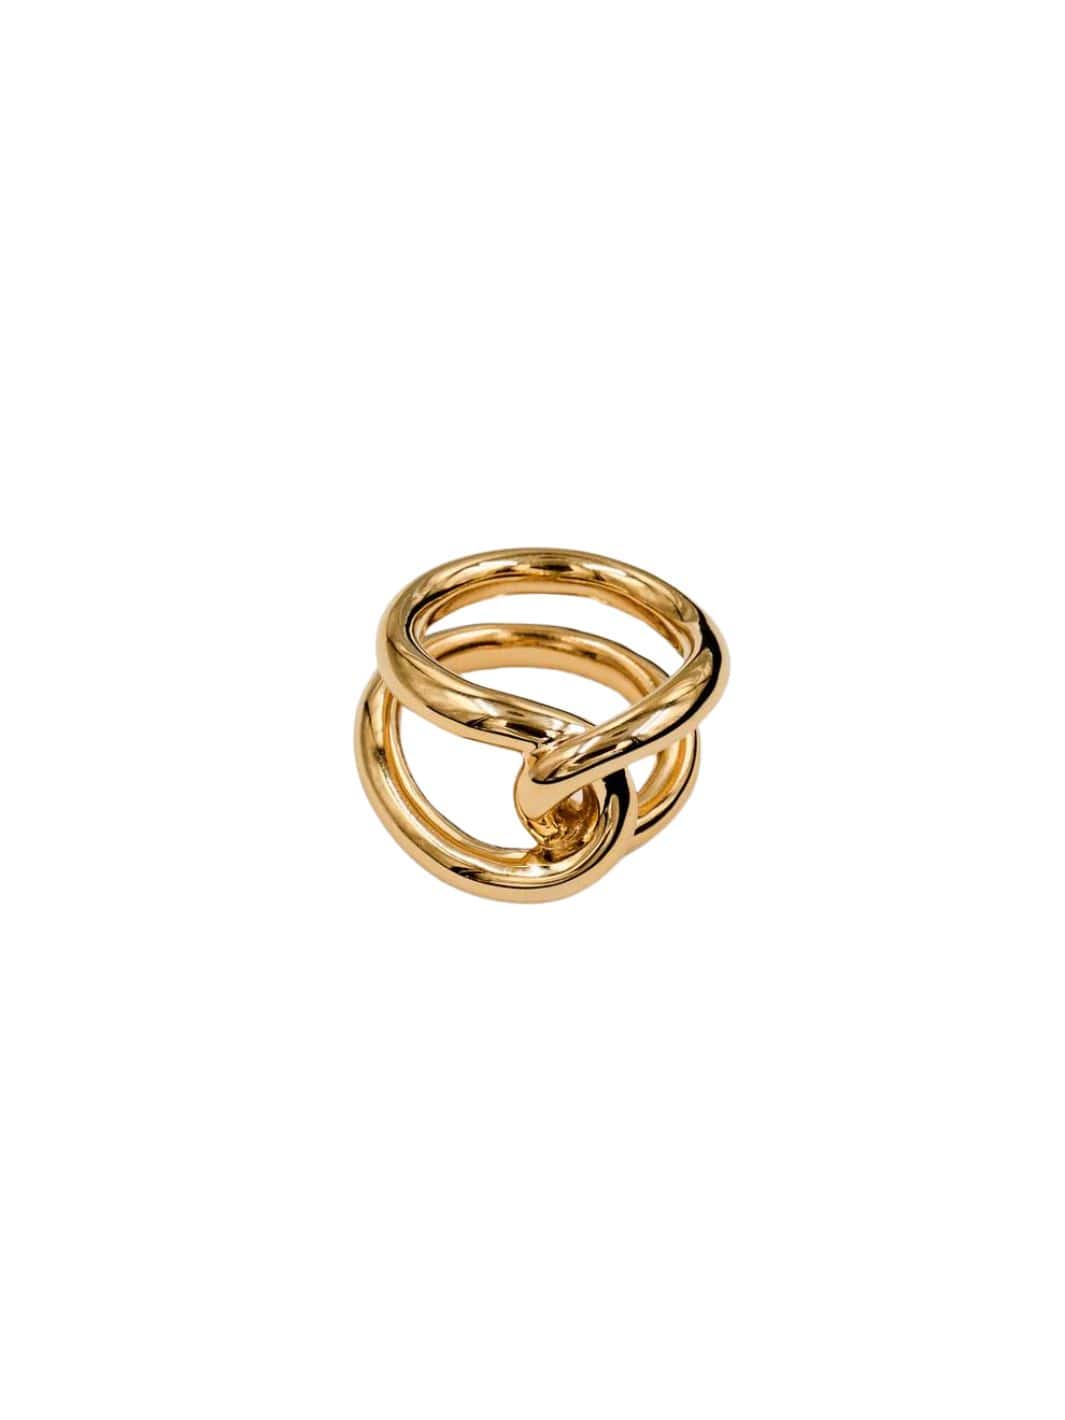 Lié Studio Accessories Ring | The Agnes Ring Gold